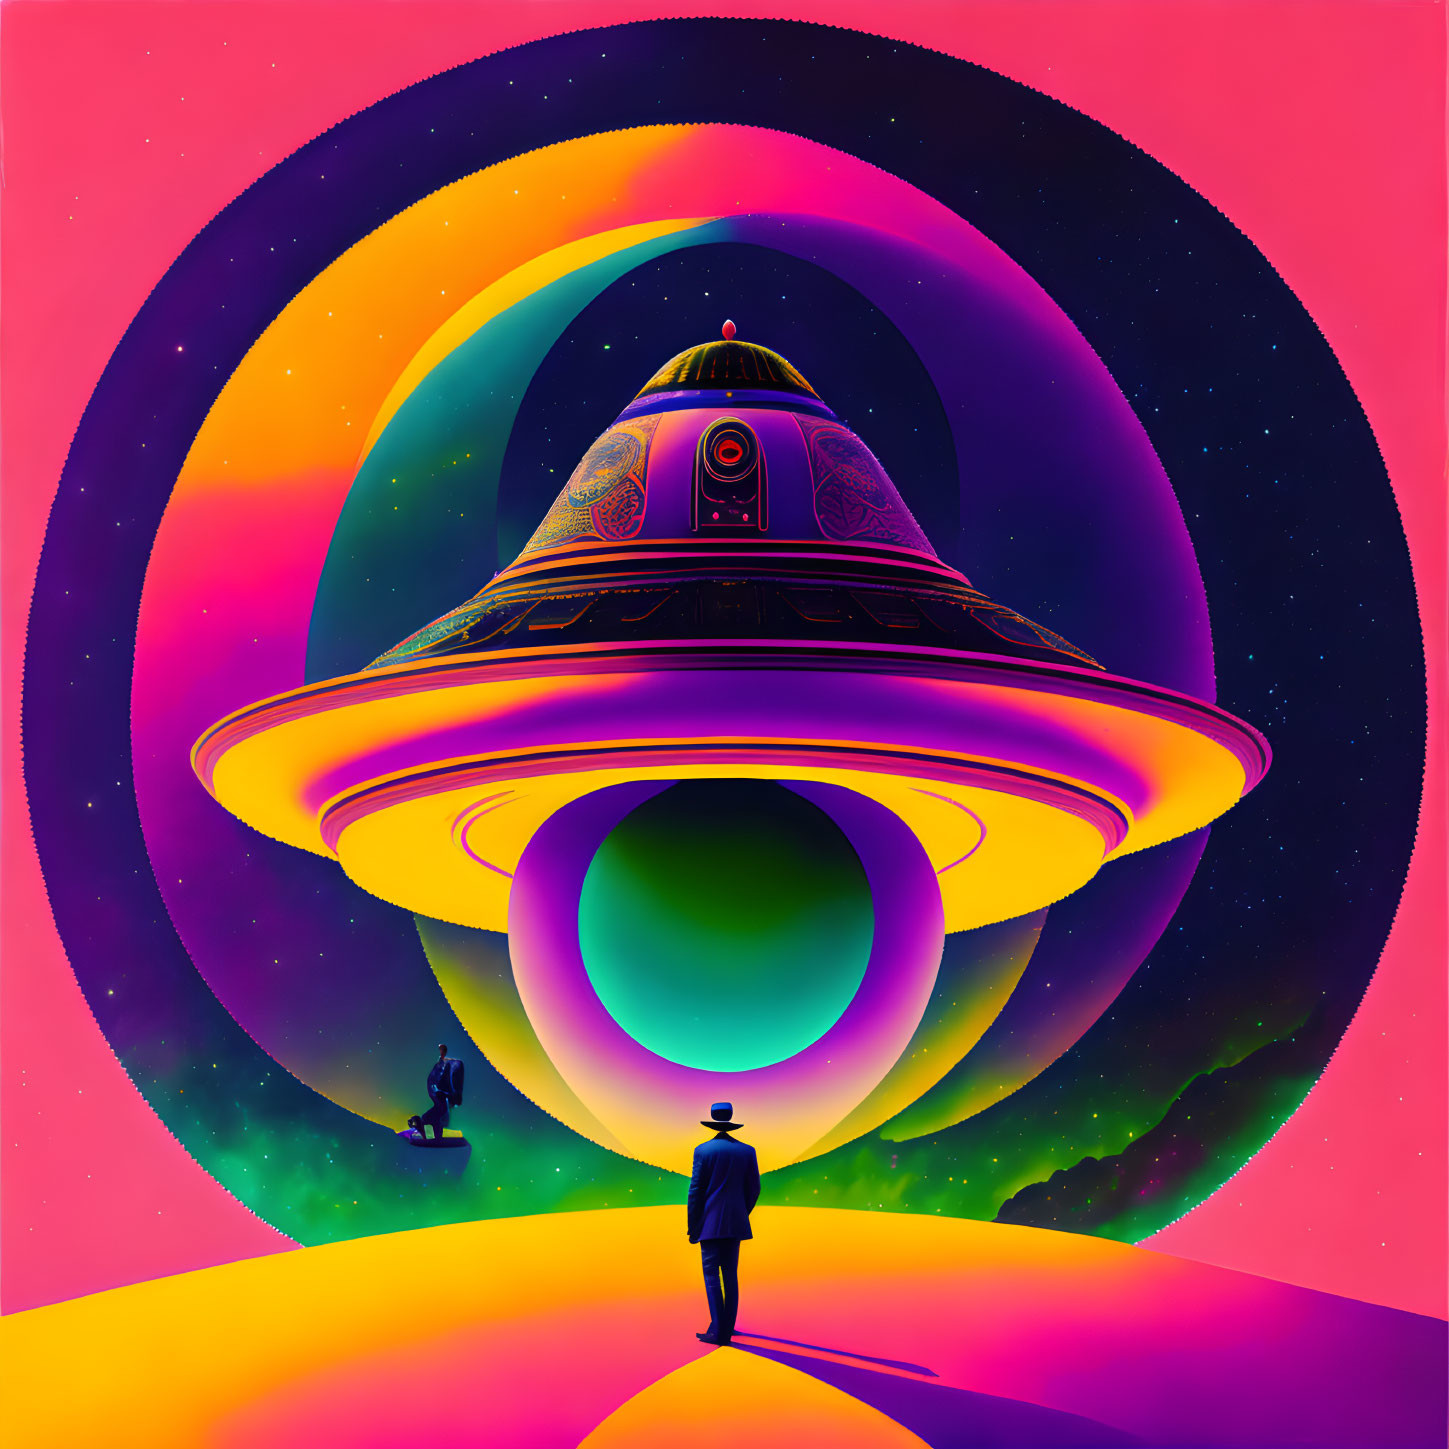 Colorful digital artwork: person observing vibrant spaceship in surreal cosmic scene